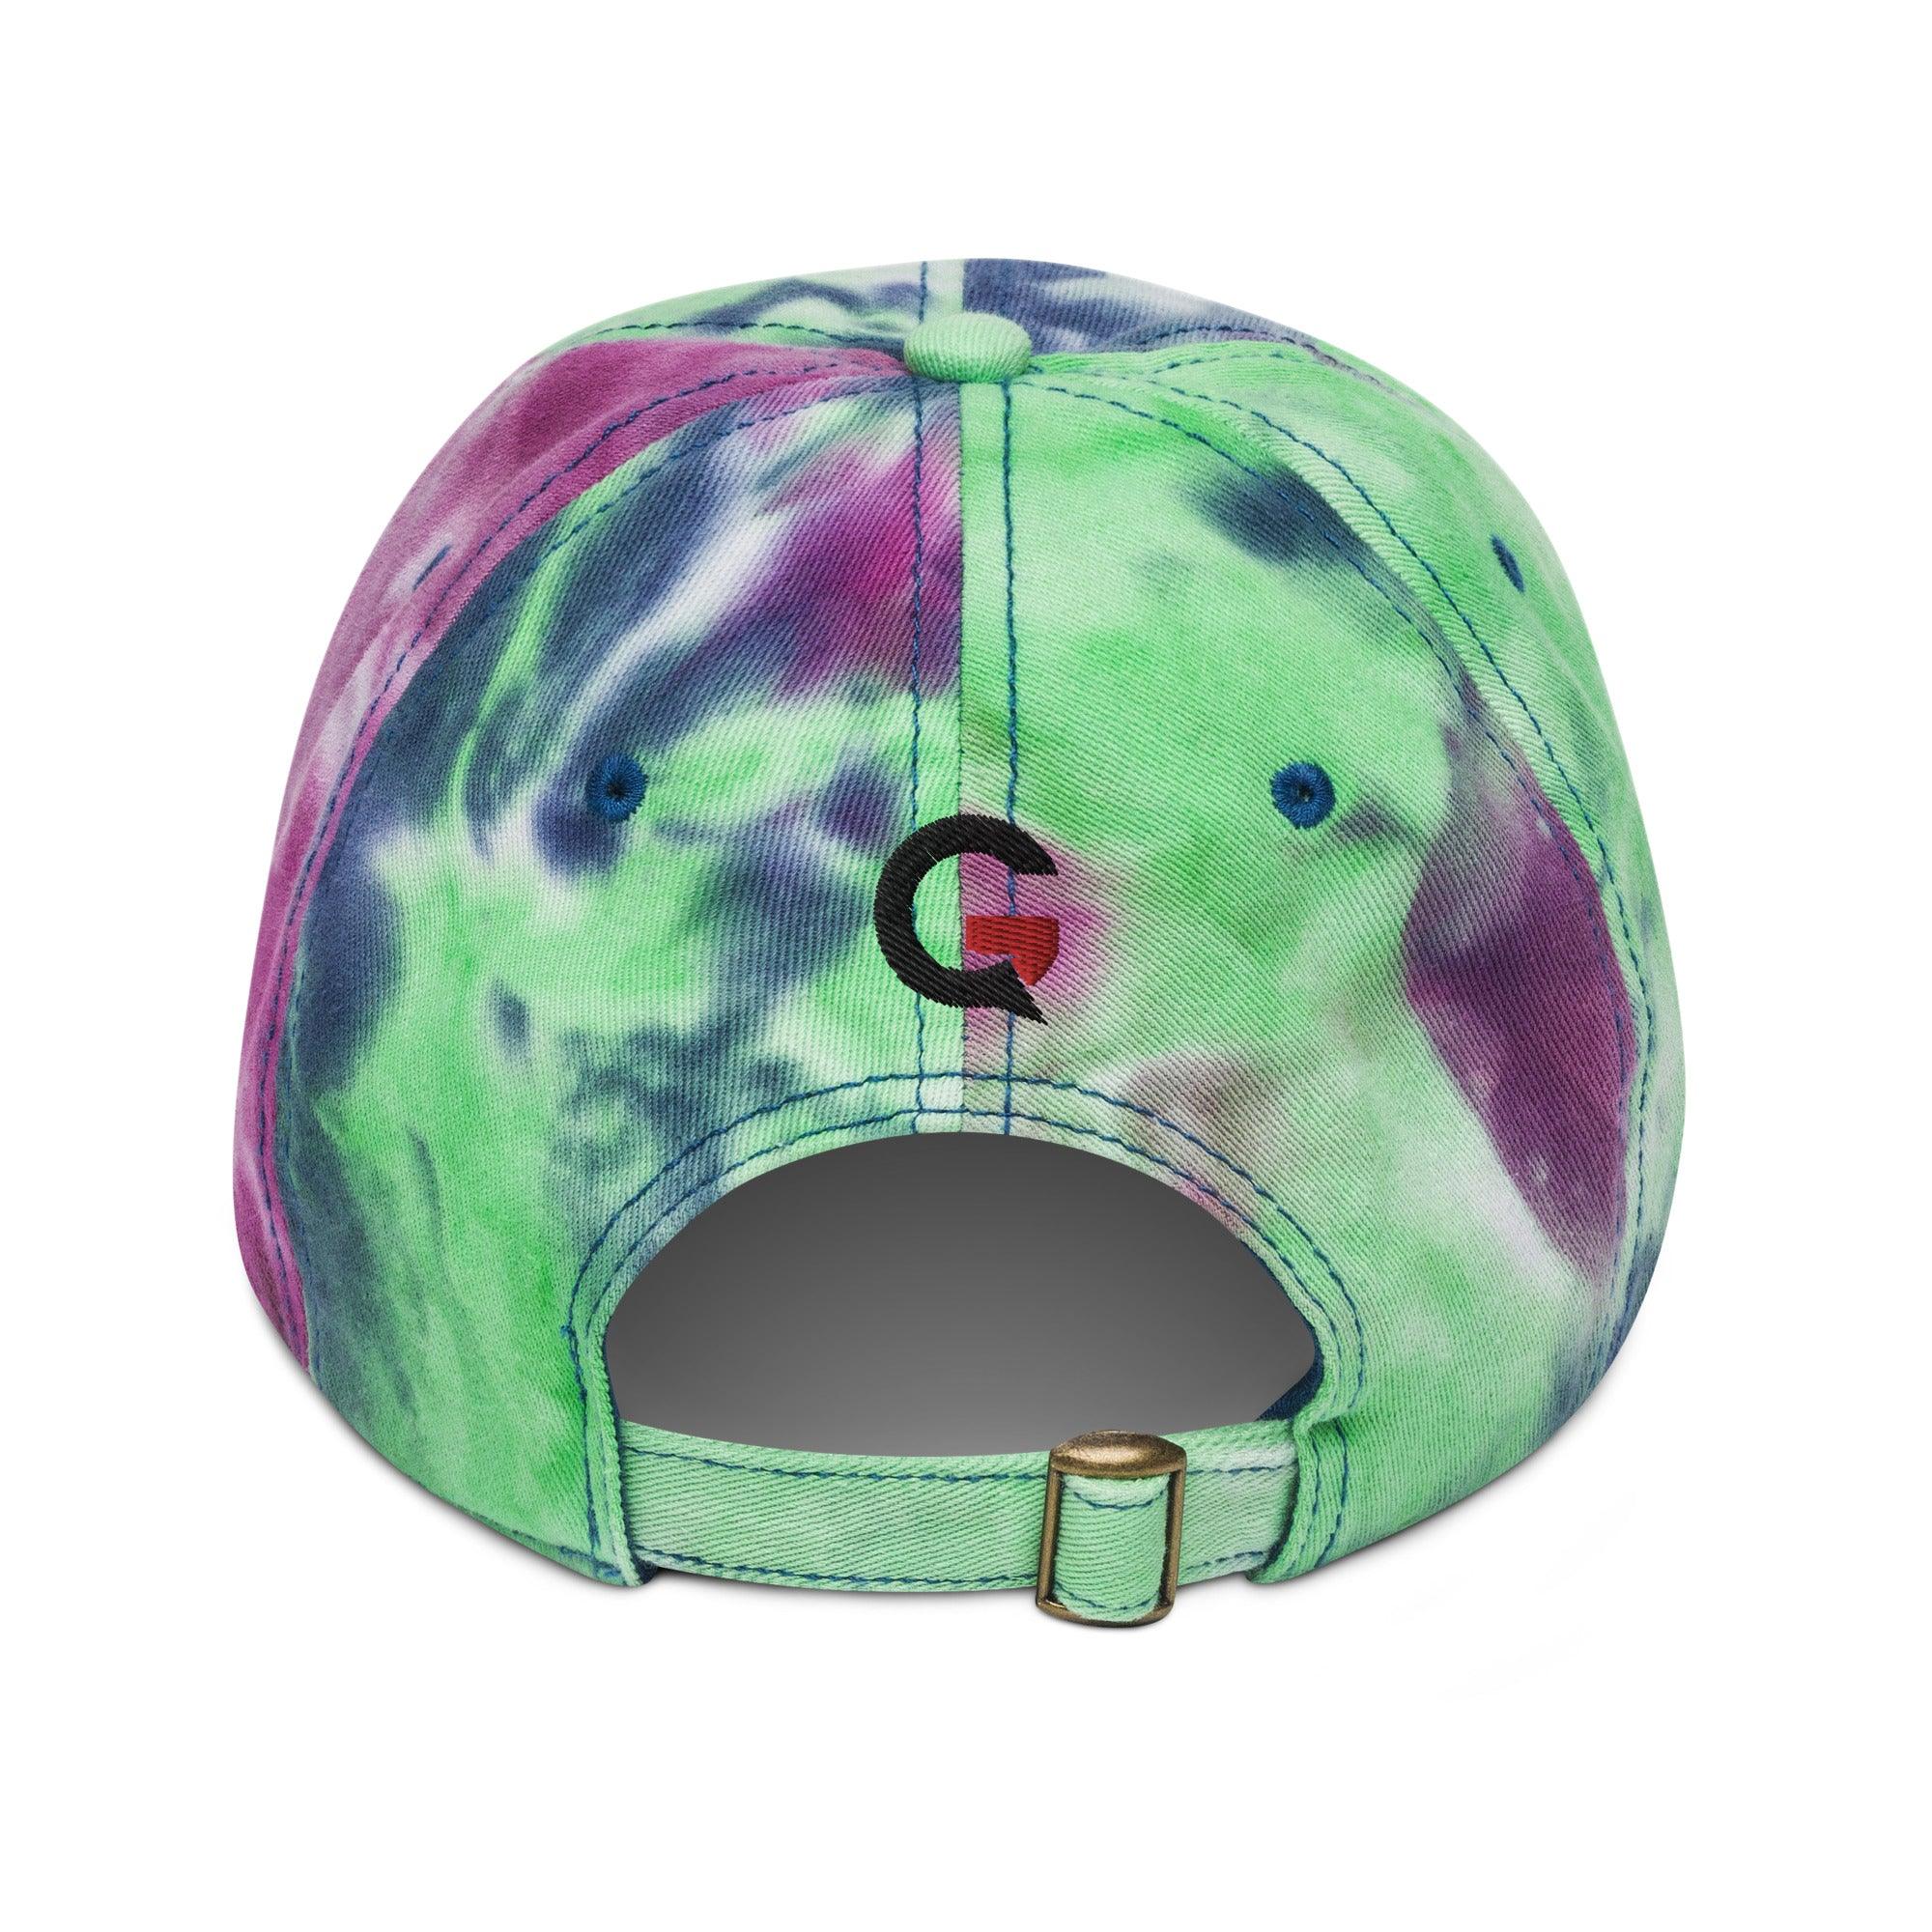 GEARTA - Bright Color Fun Tie Dye Hat